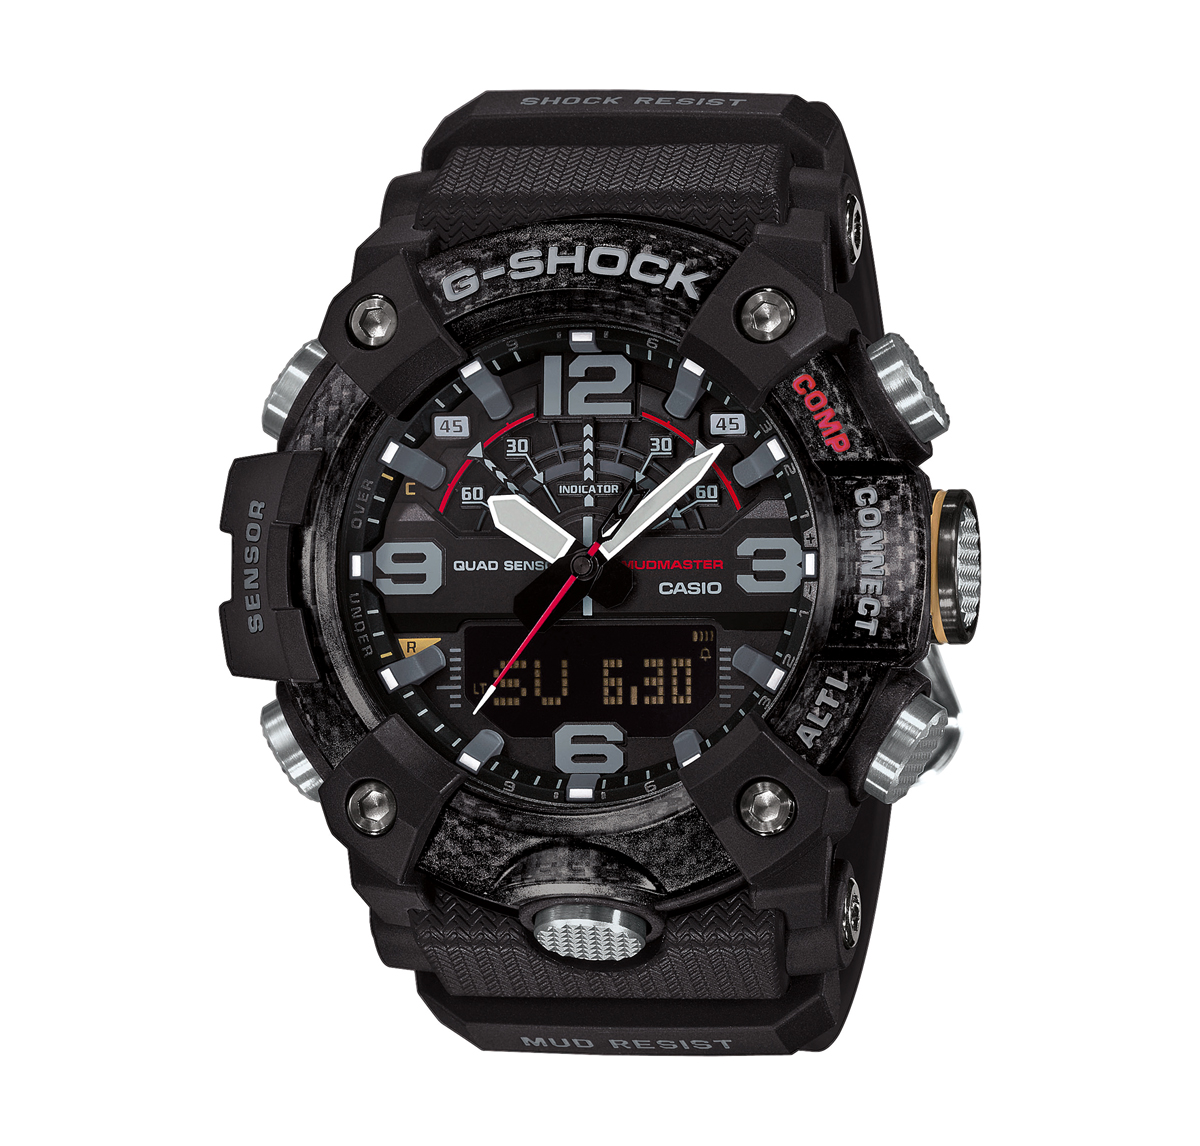 G-Shock GG-B100-1AER - Mudmaster - Black